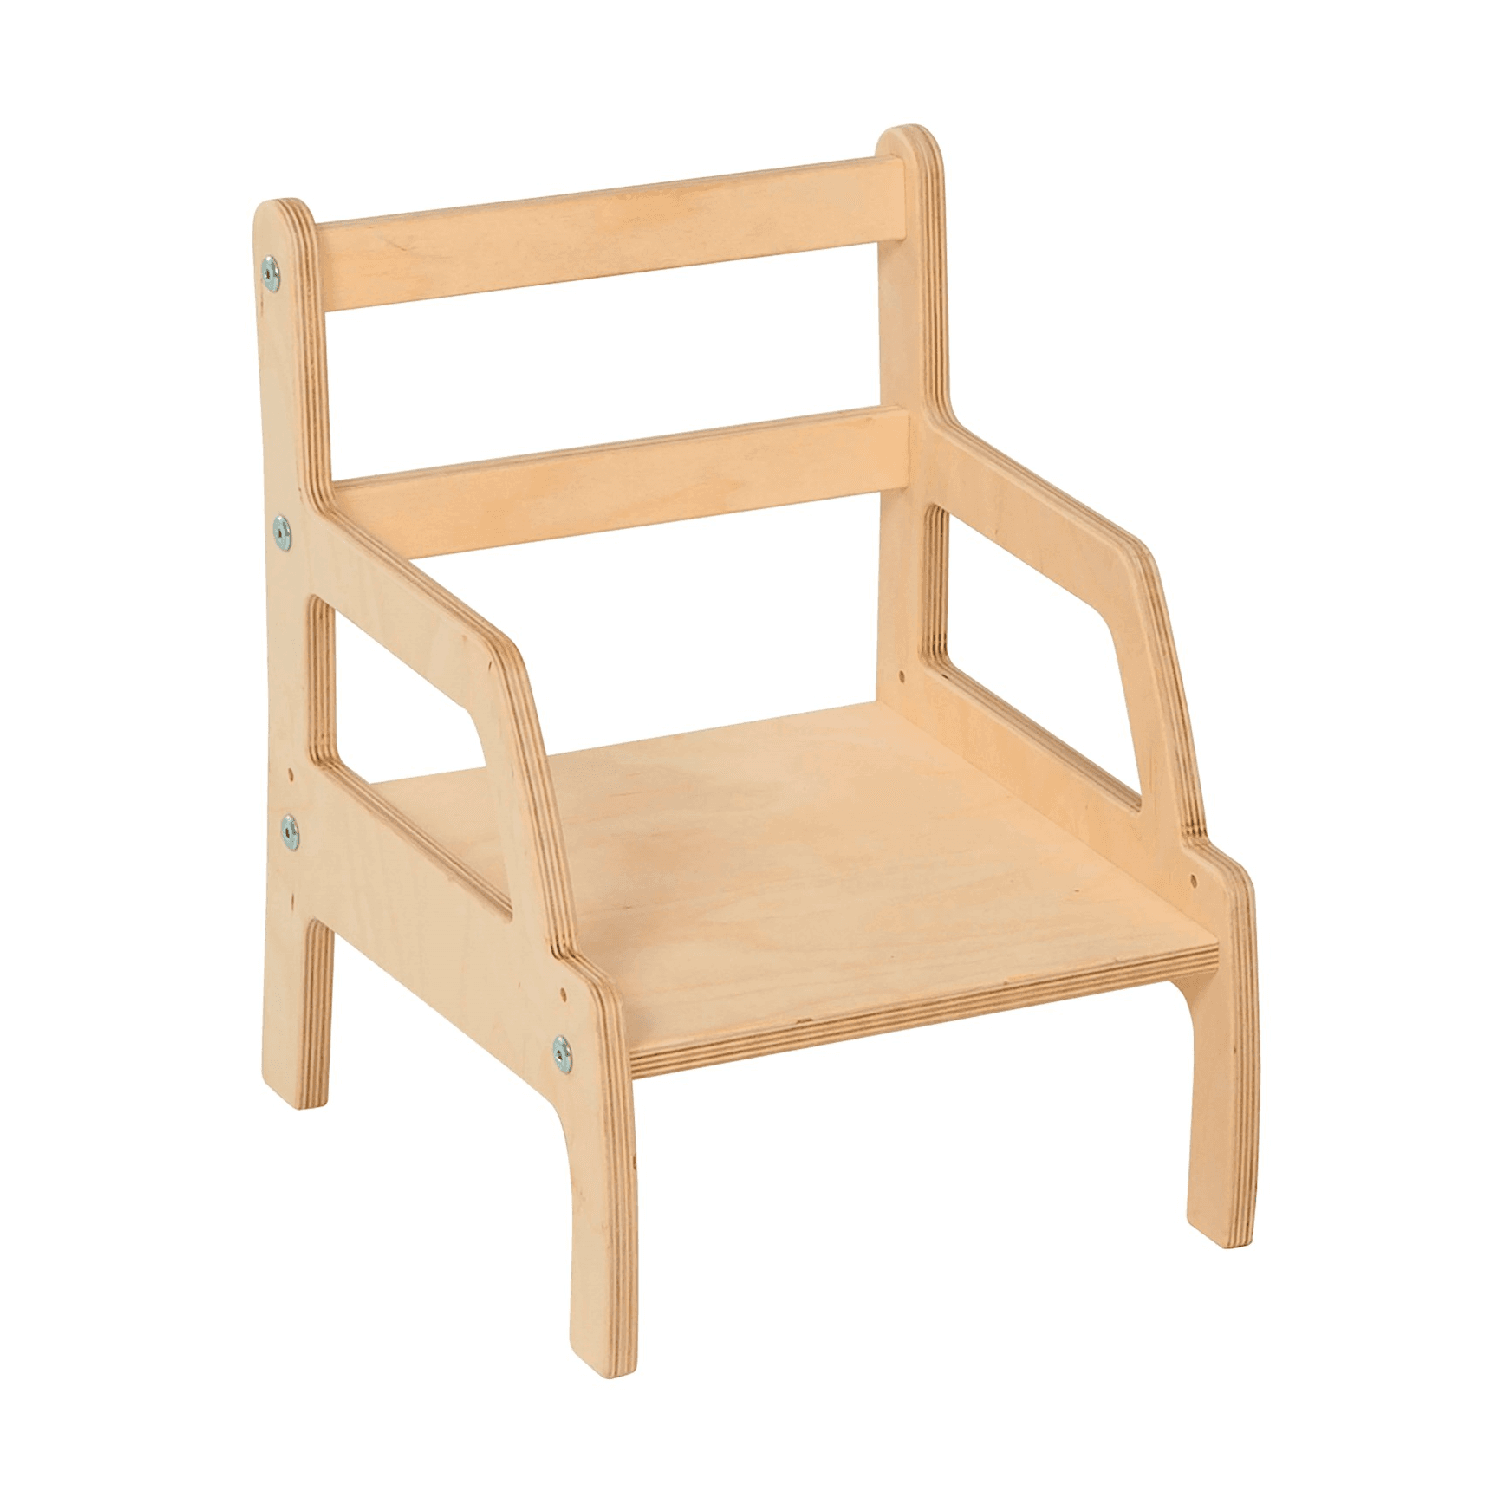 Montessori Nienhuis Weaning Chair Adjustable Height